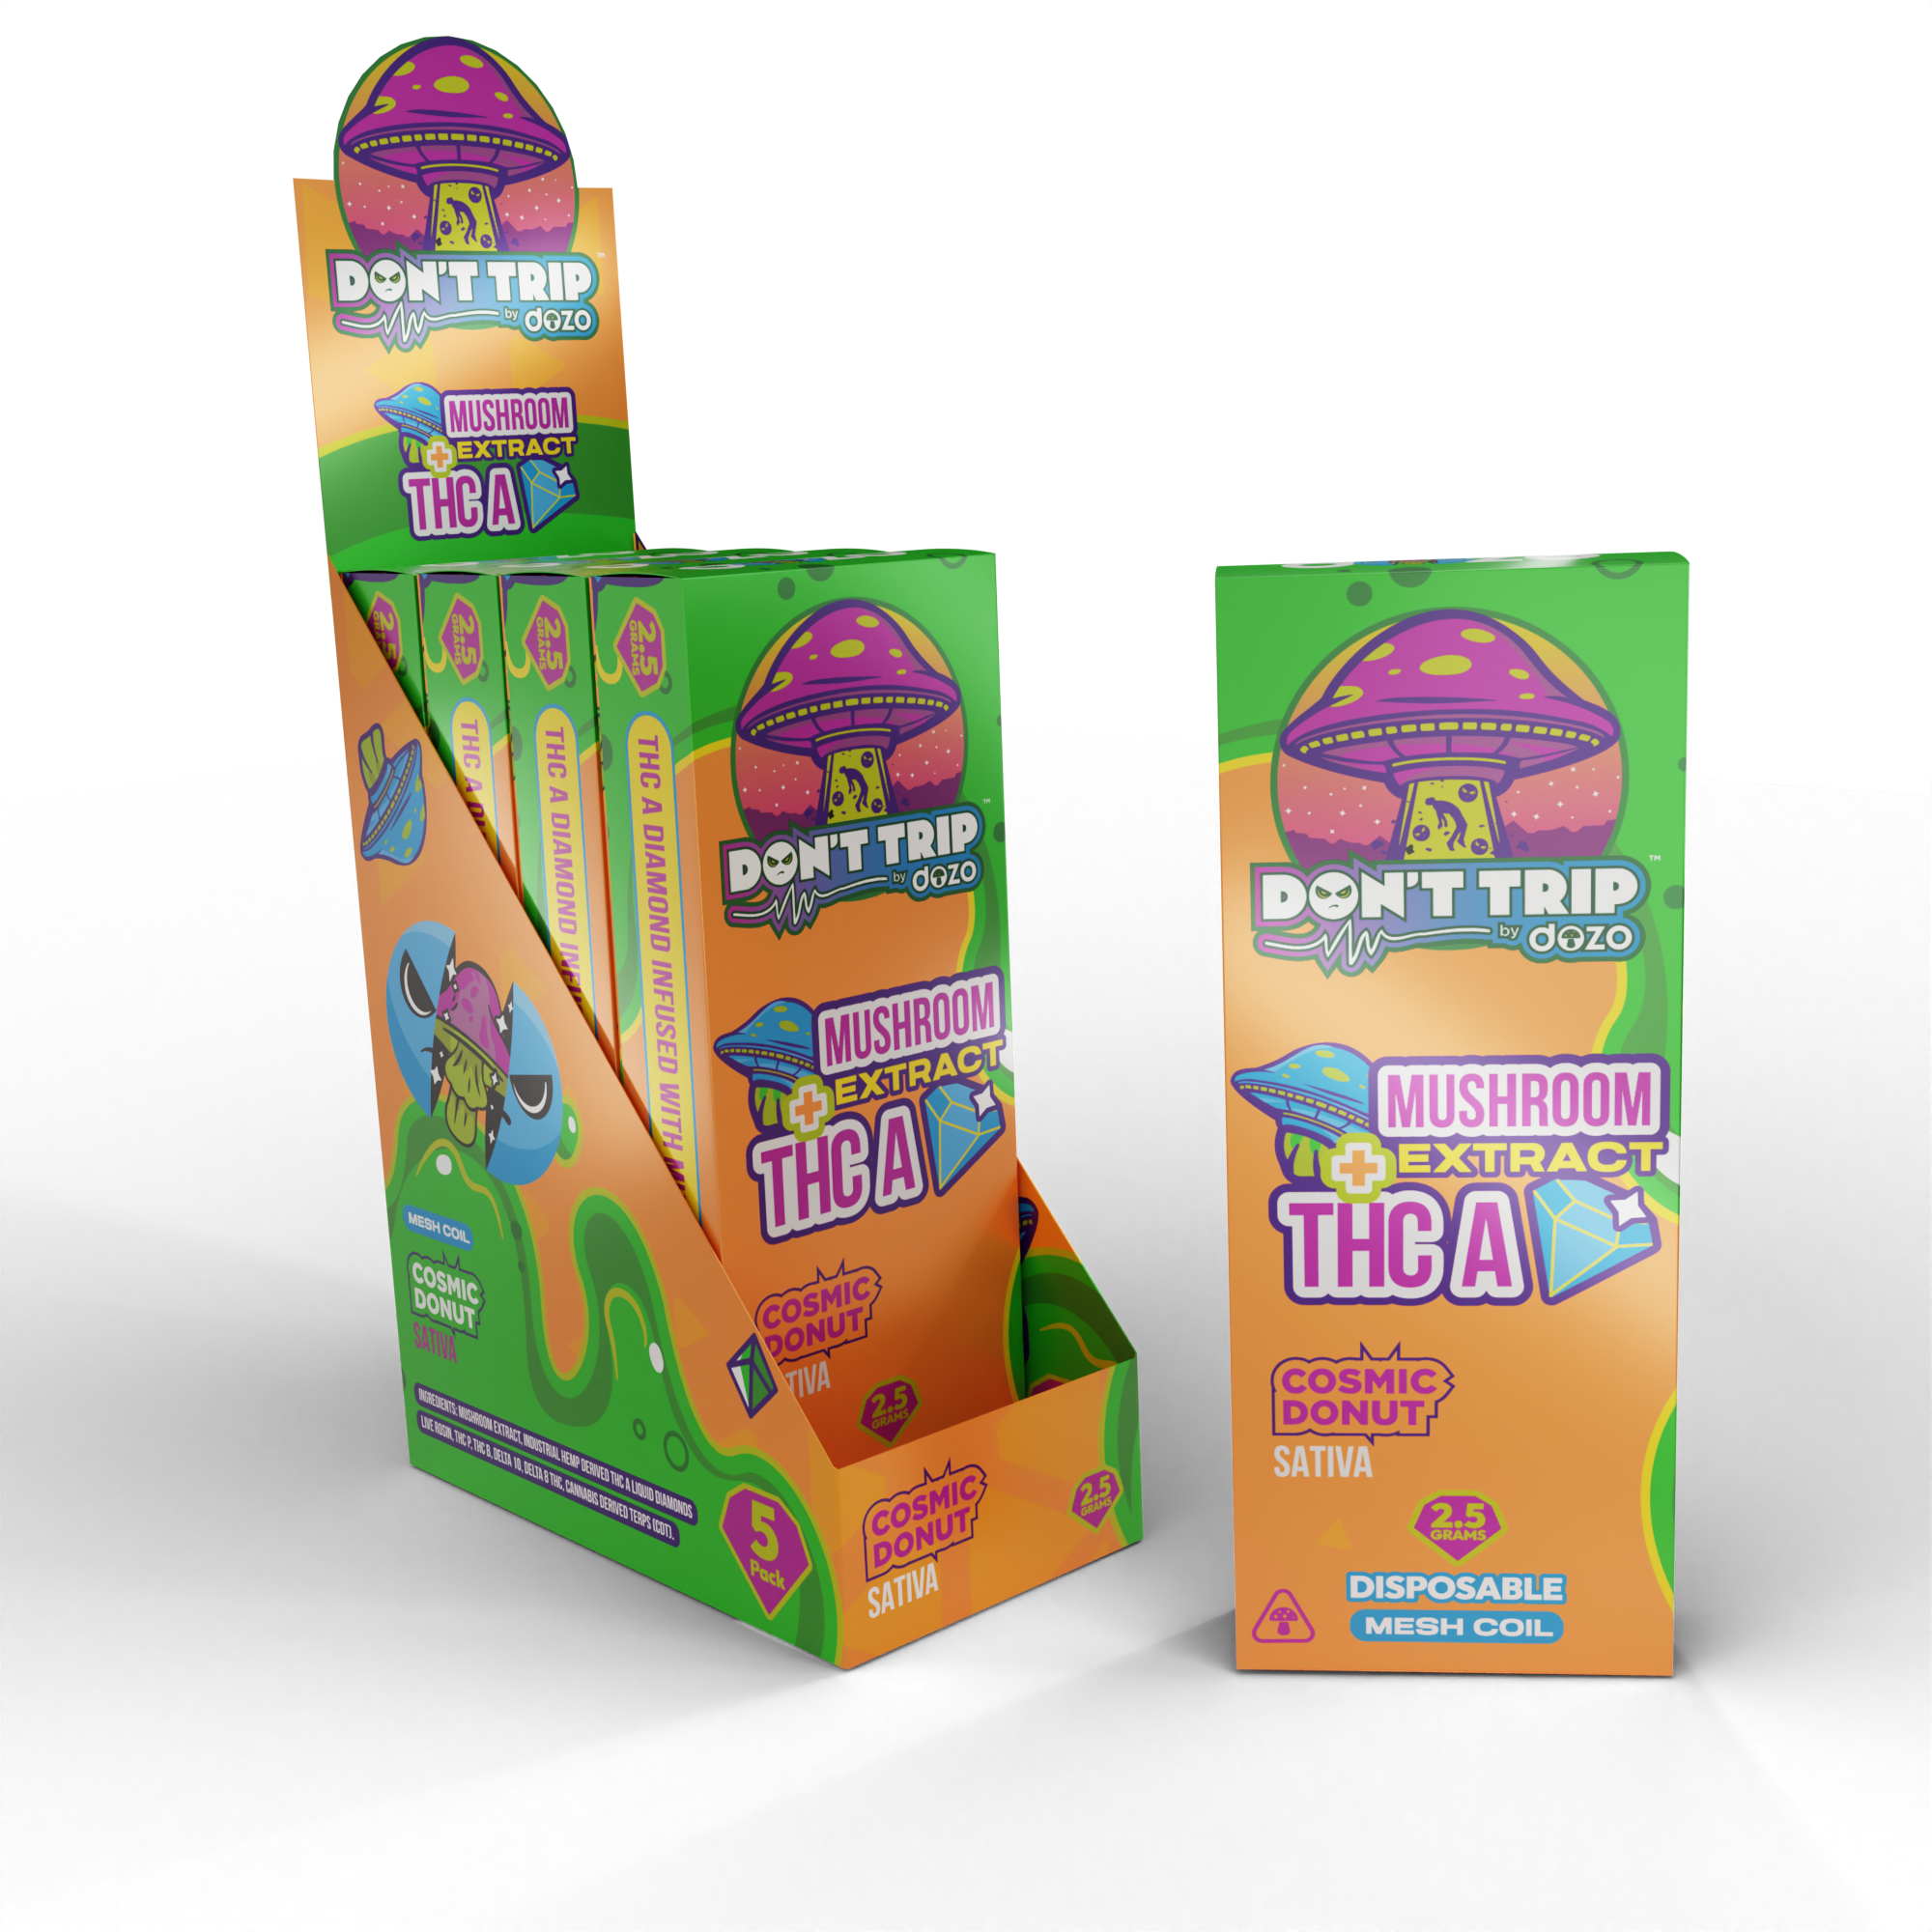 Don't Trip 2.5g THCA Diamond + Amanita Mushroom Extract Disposable - 5ct. Box